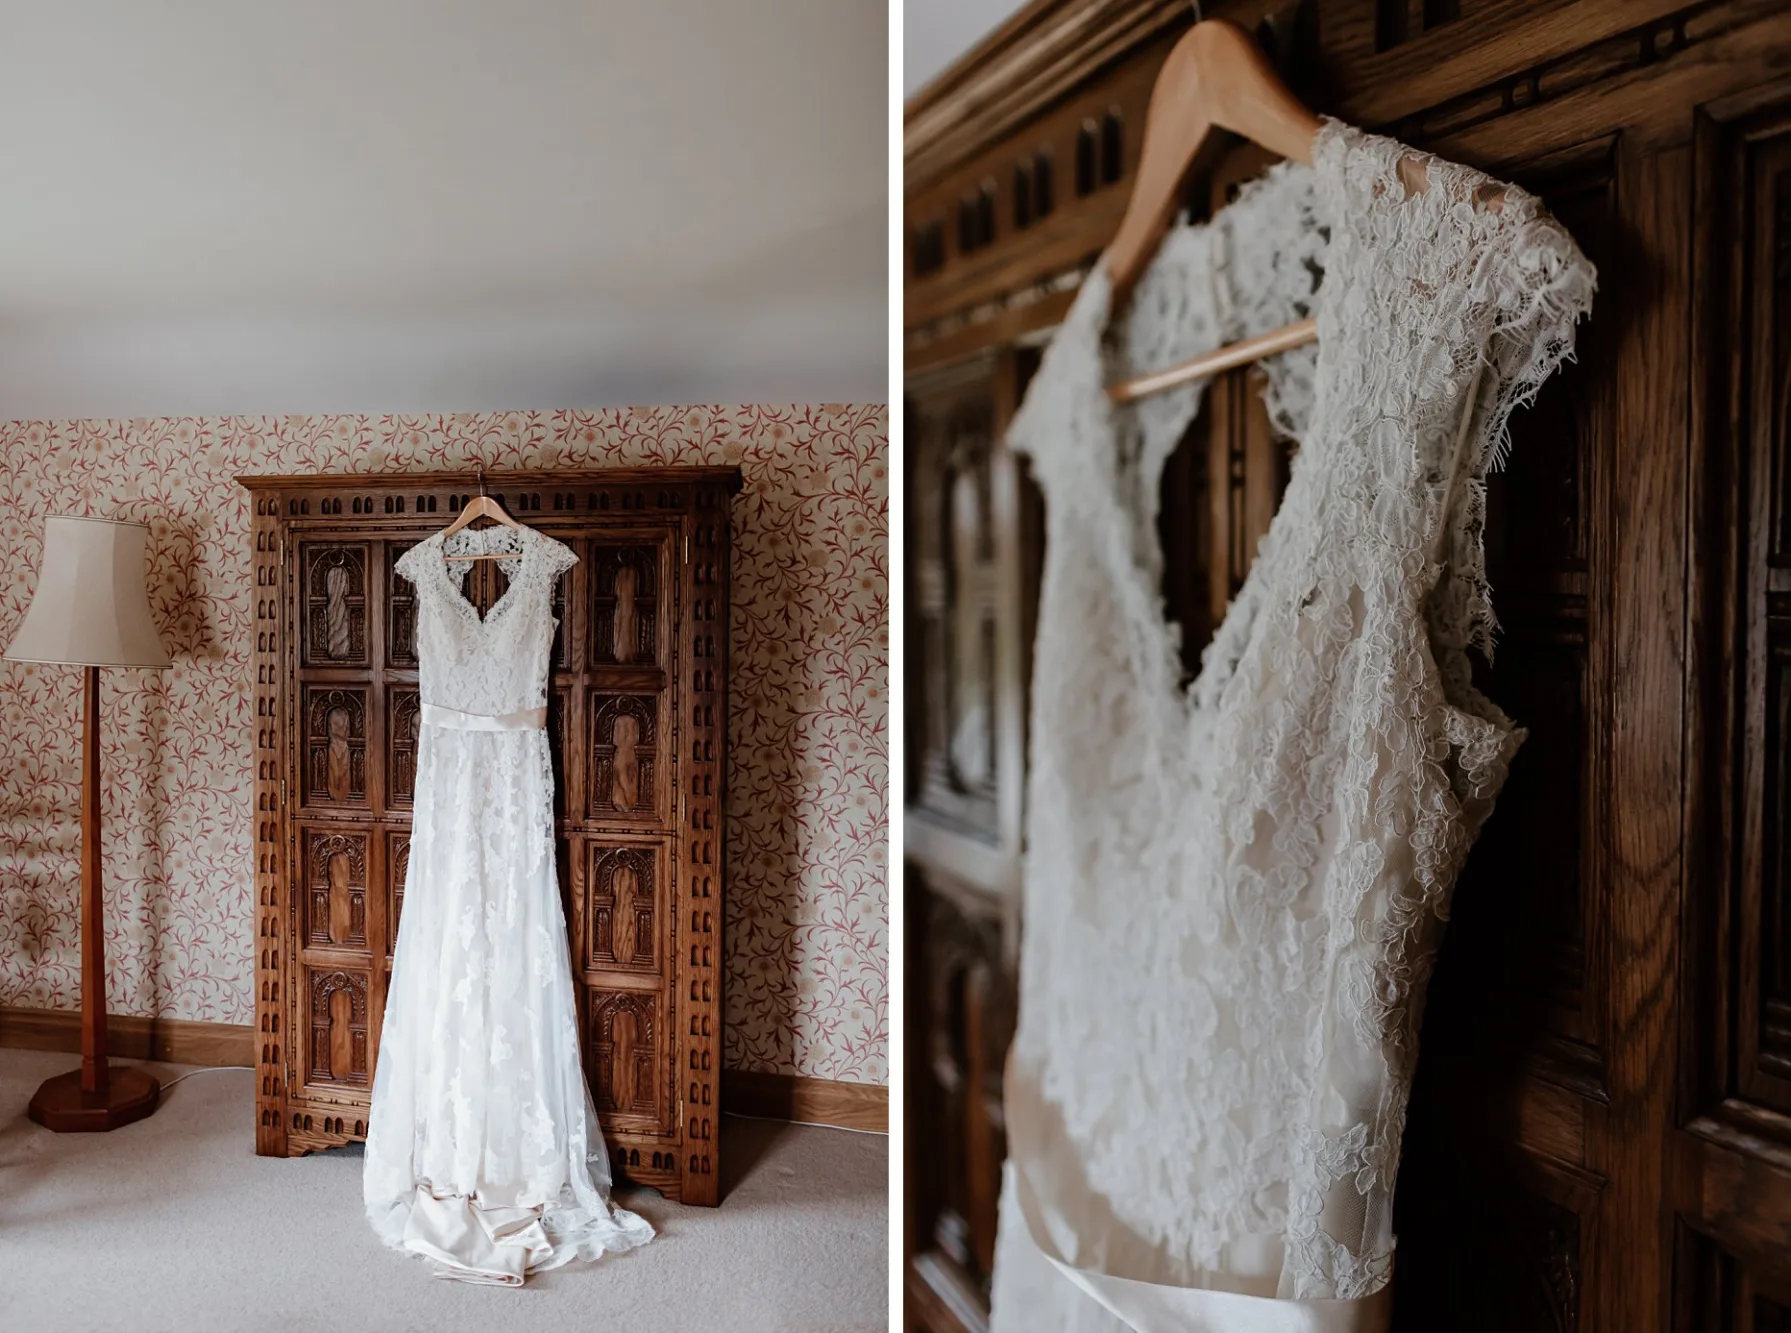 Lace wedding dress hung up on dark wooden wardrobes.